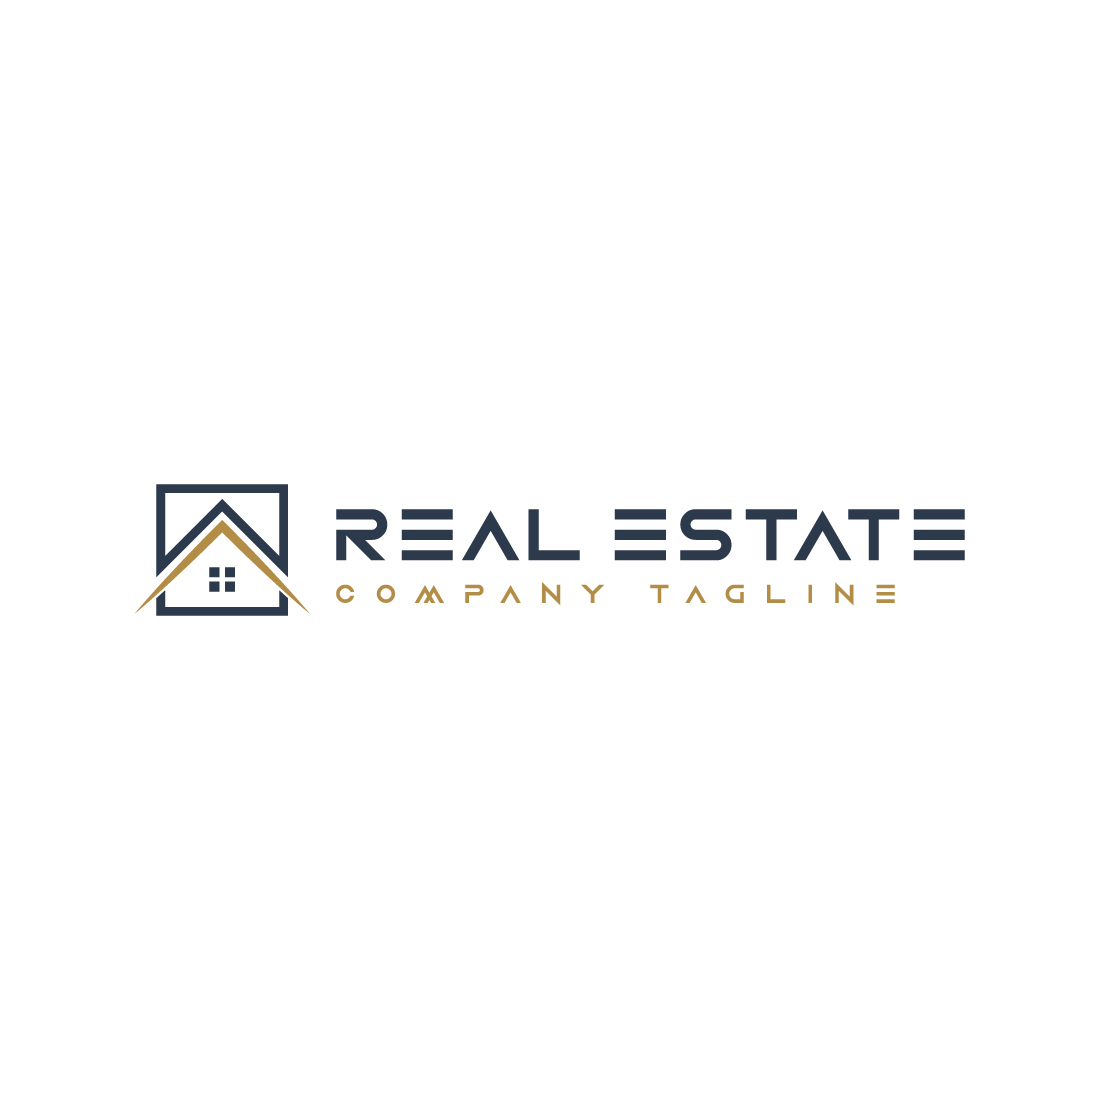 Real estate logo with golden, dark blue color preview image.